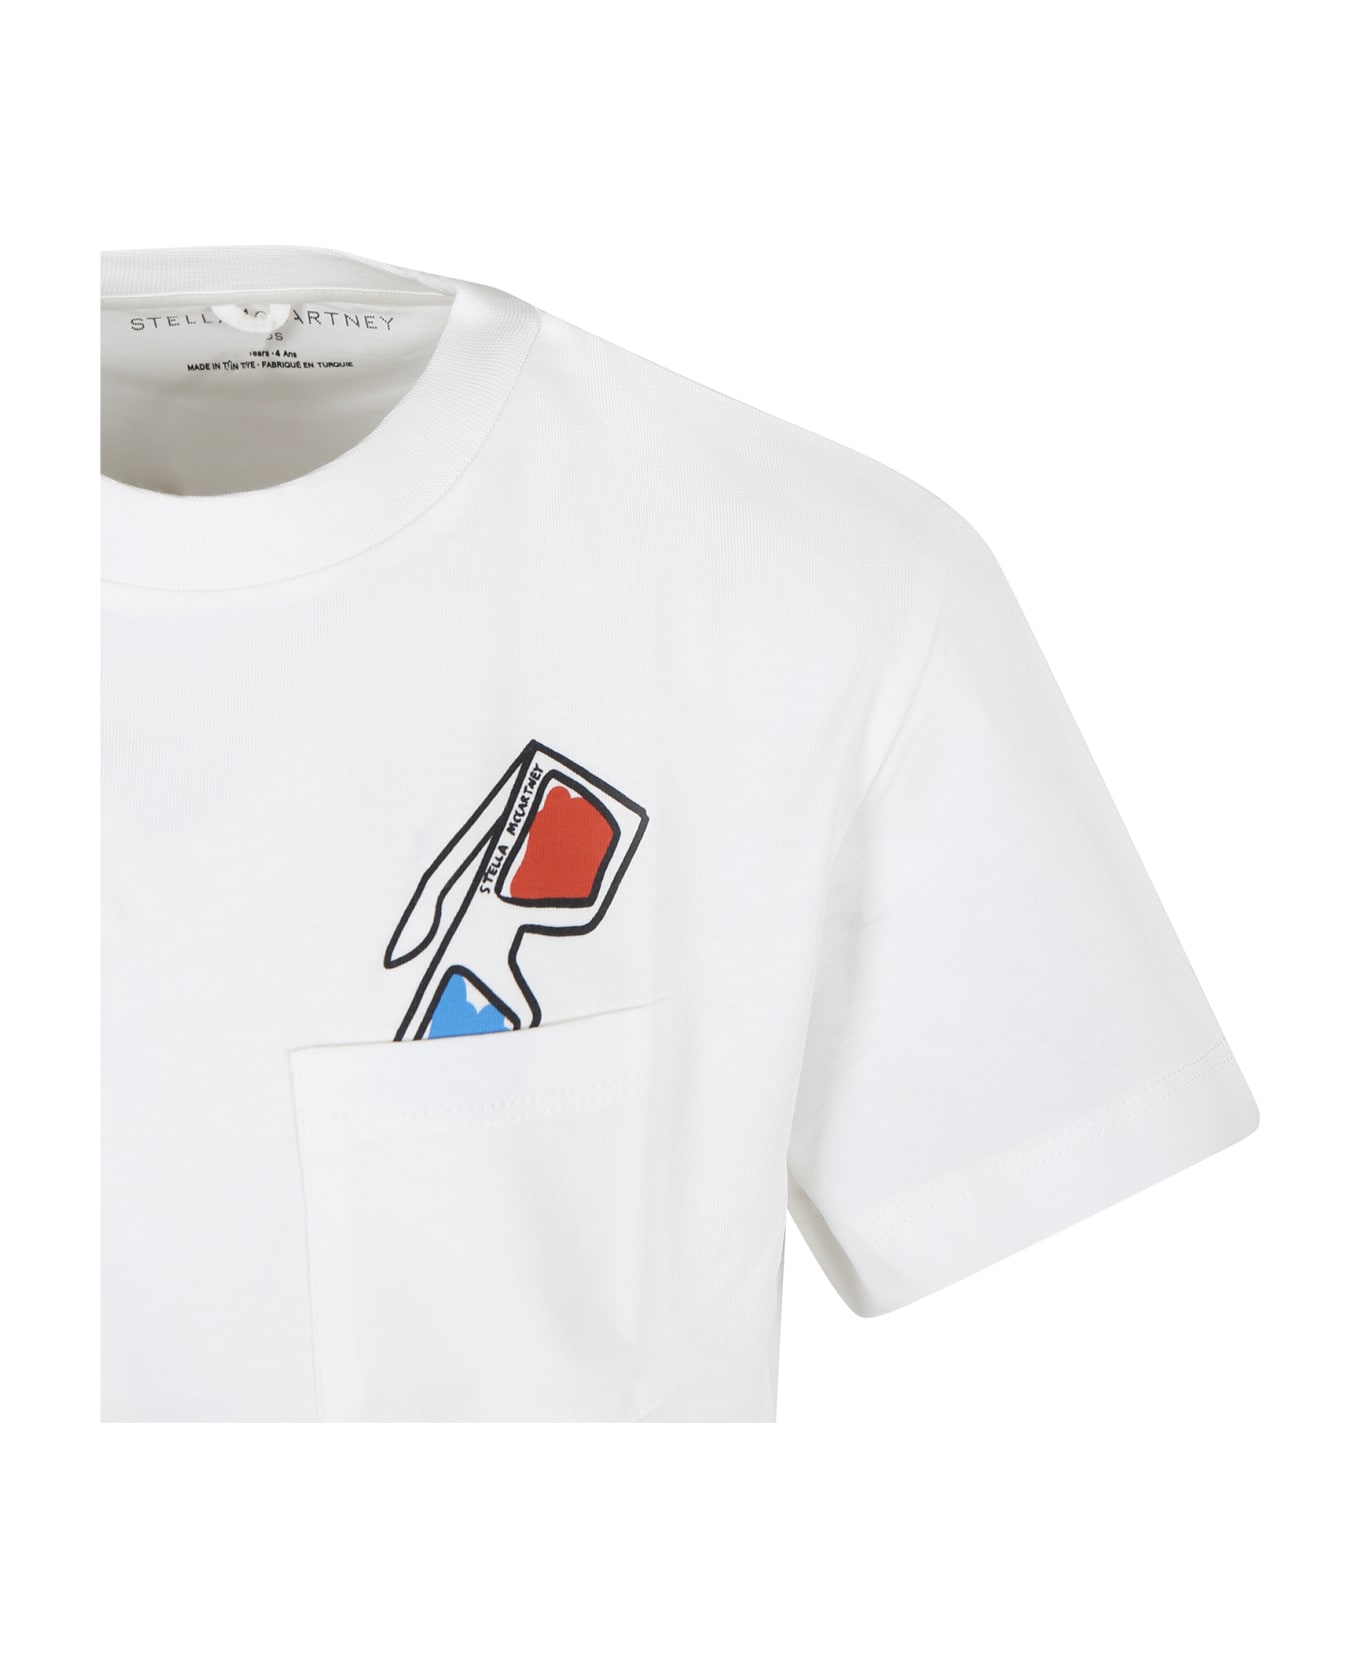 Stella McCartney Kids Ivory T-shirt For Boy With Glasses Print - Ivory